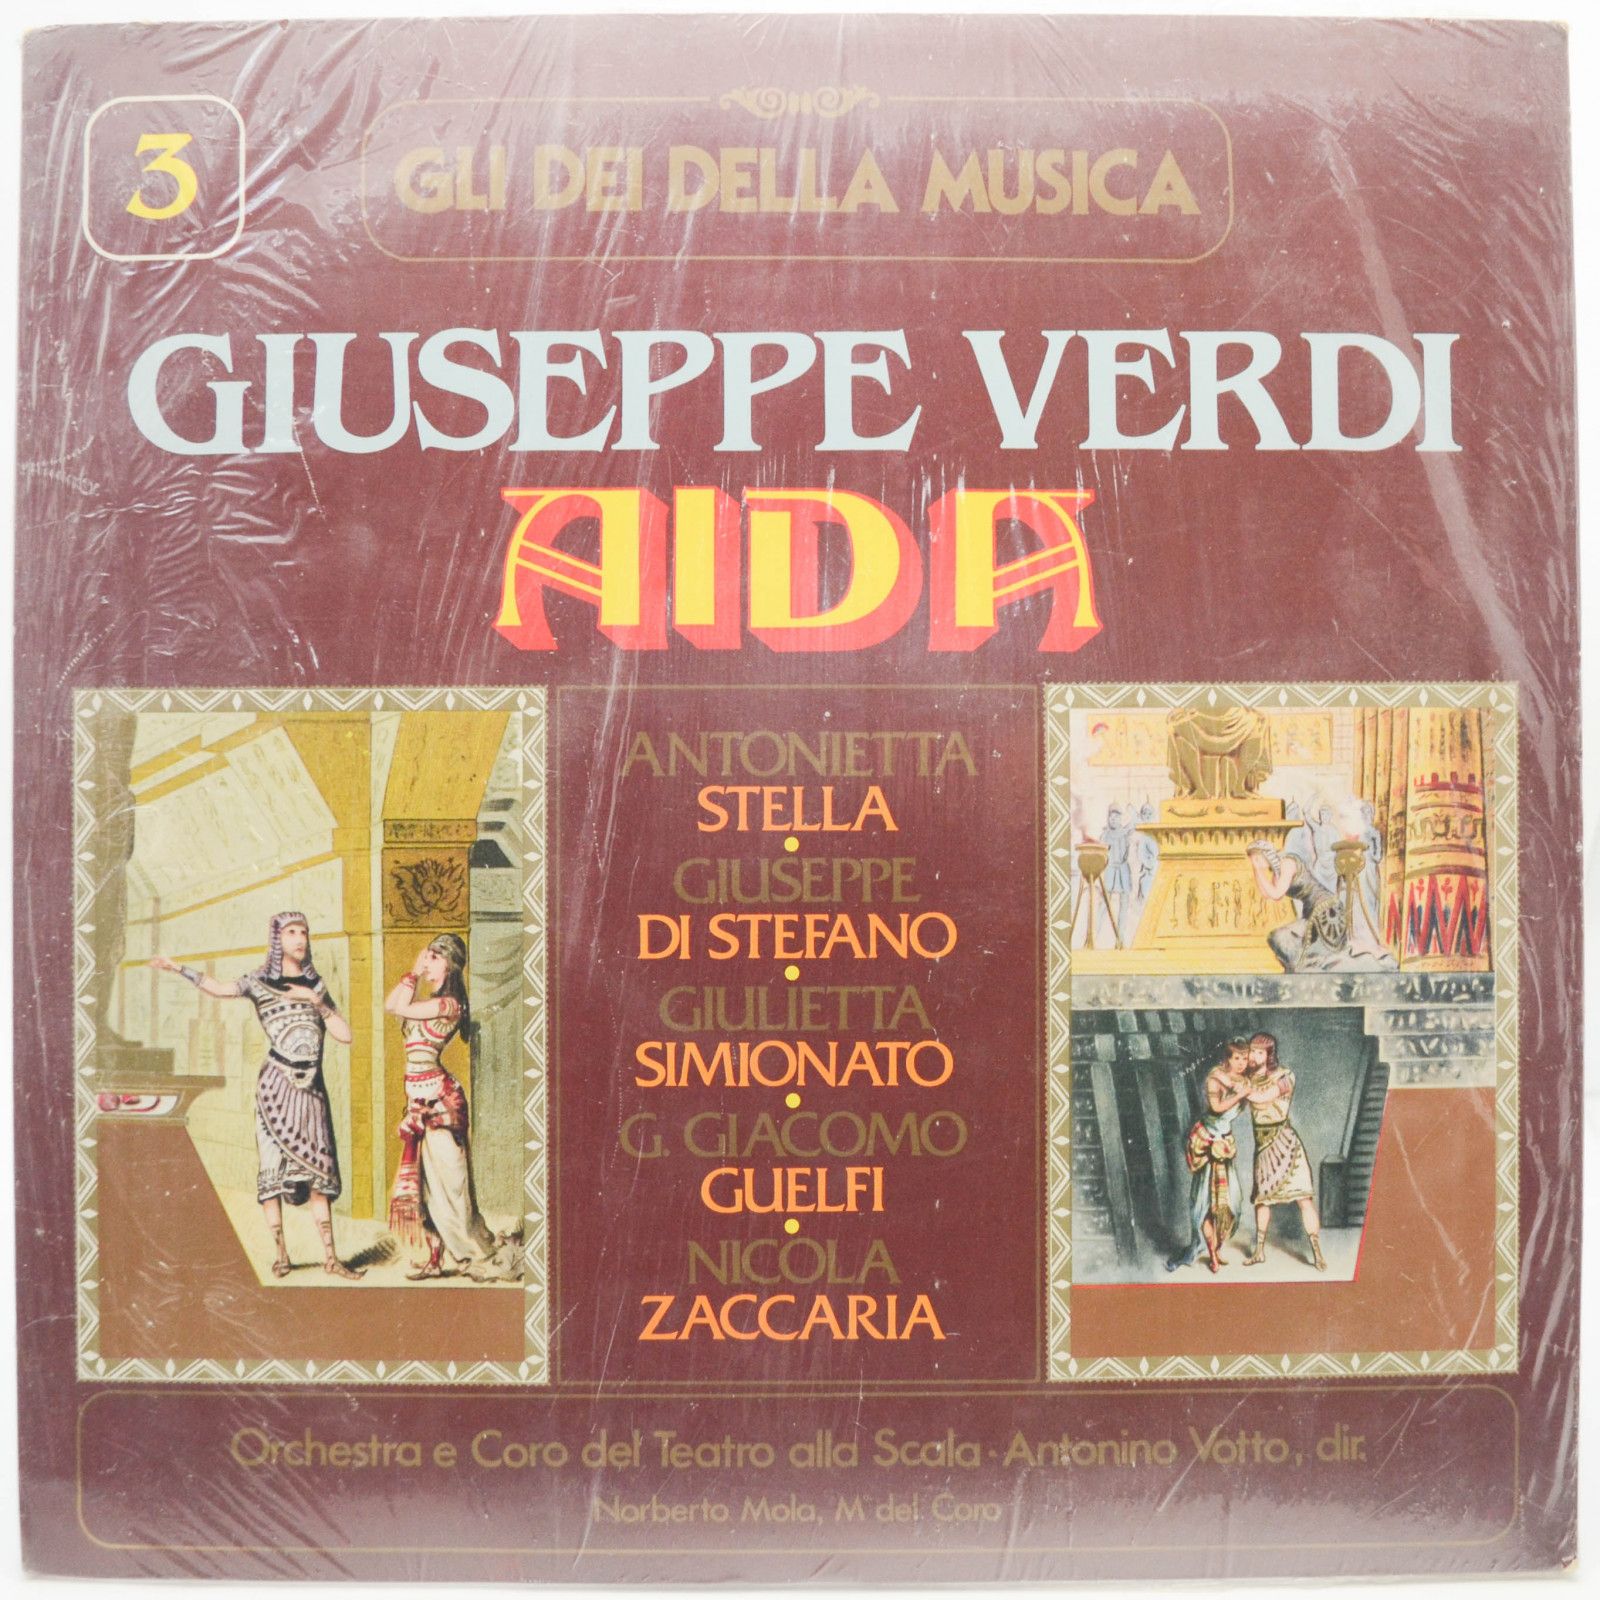 Giuseppe Verdi — Aida (Italy), 1981